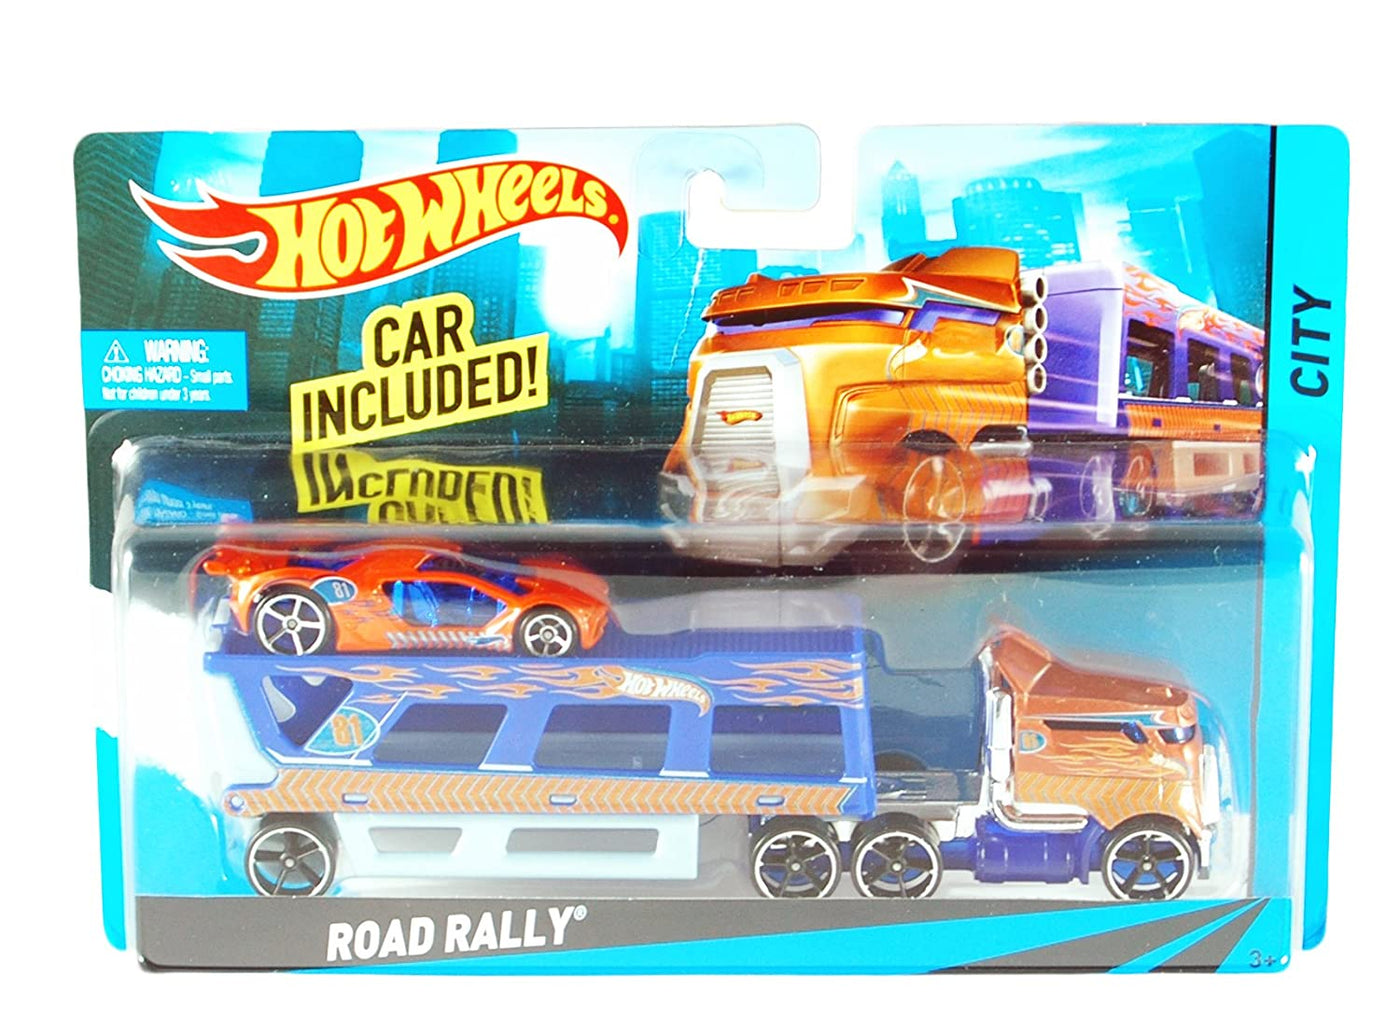 City Road Rally Toy Car Set | Hot Wheels®